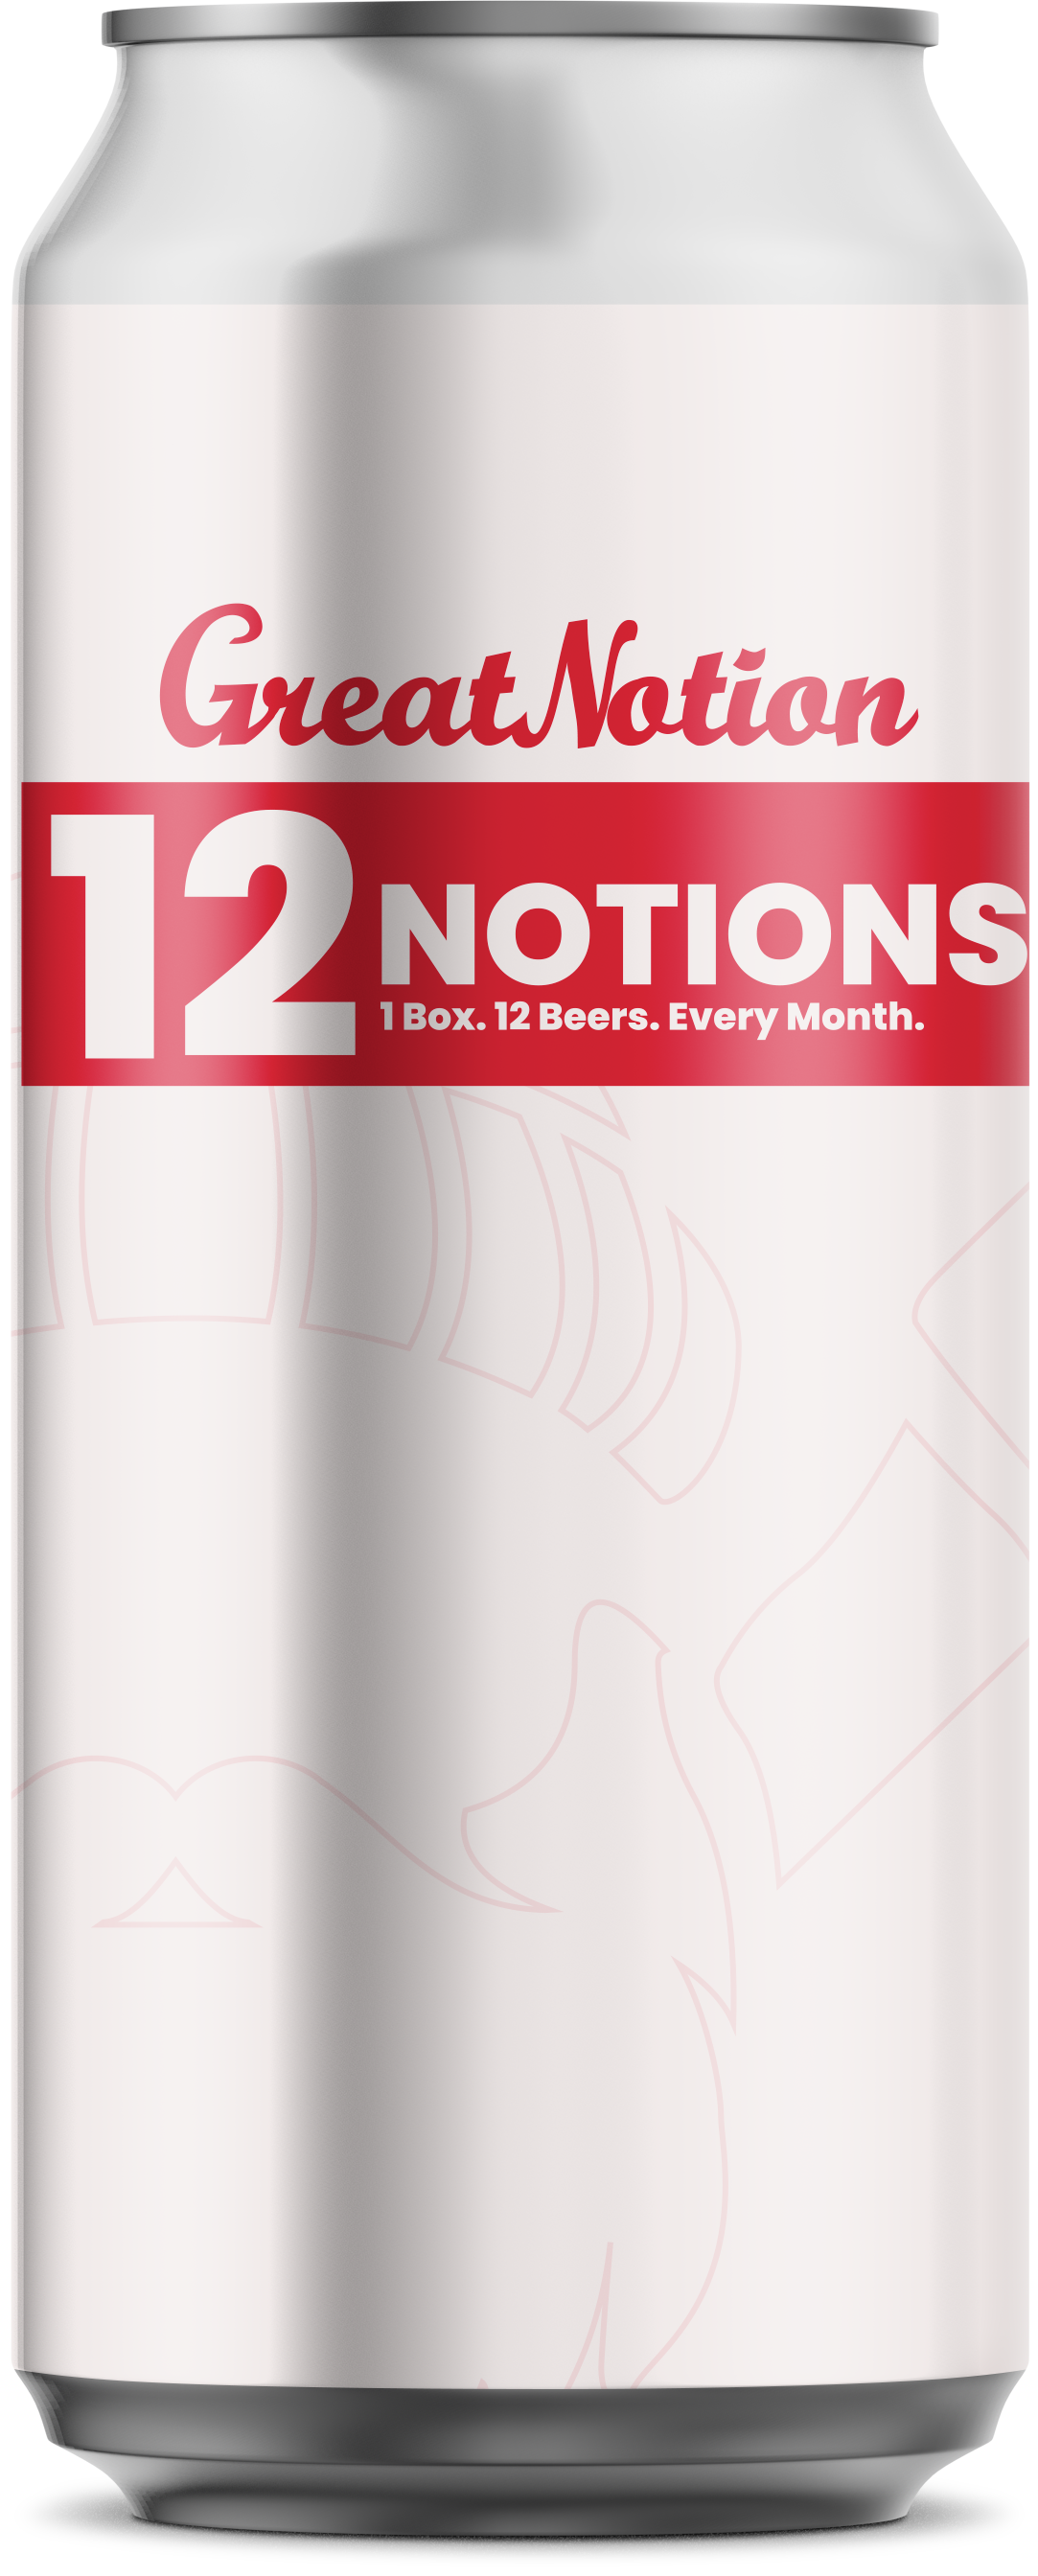 12 Notions - June